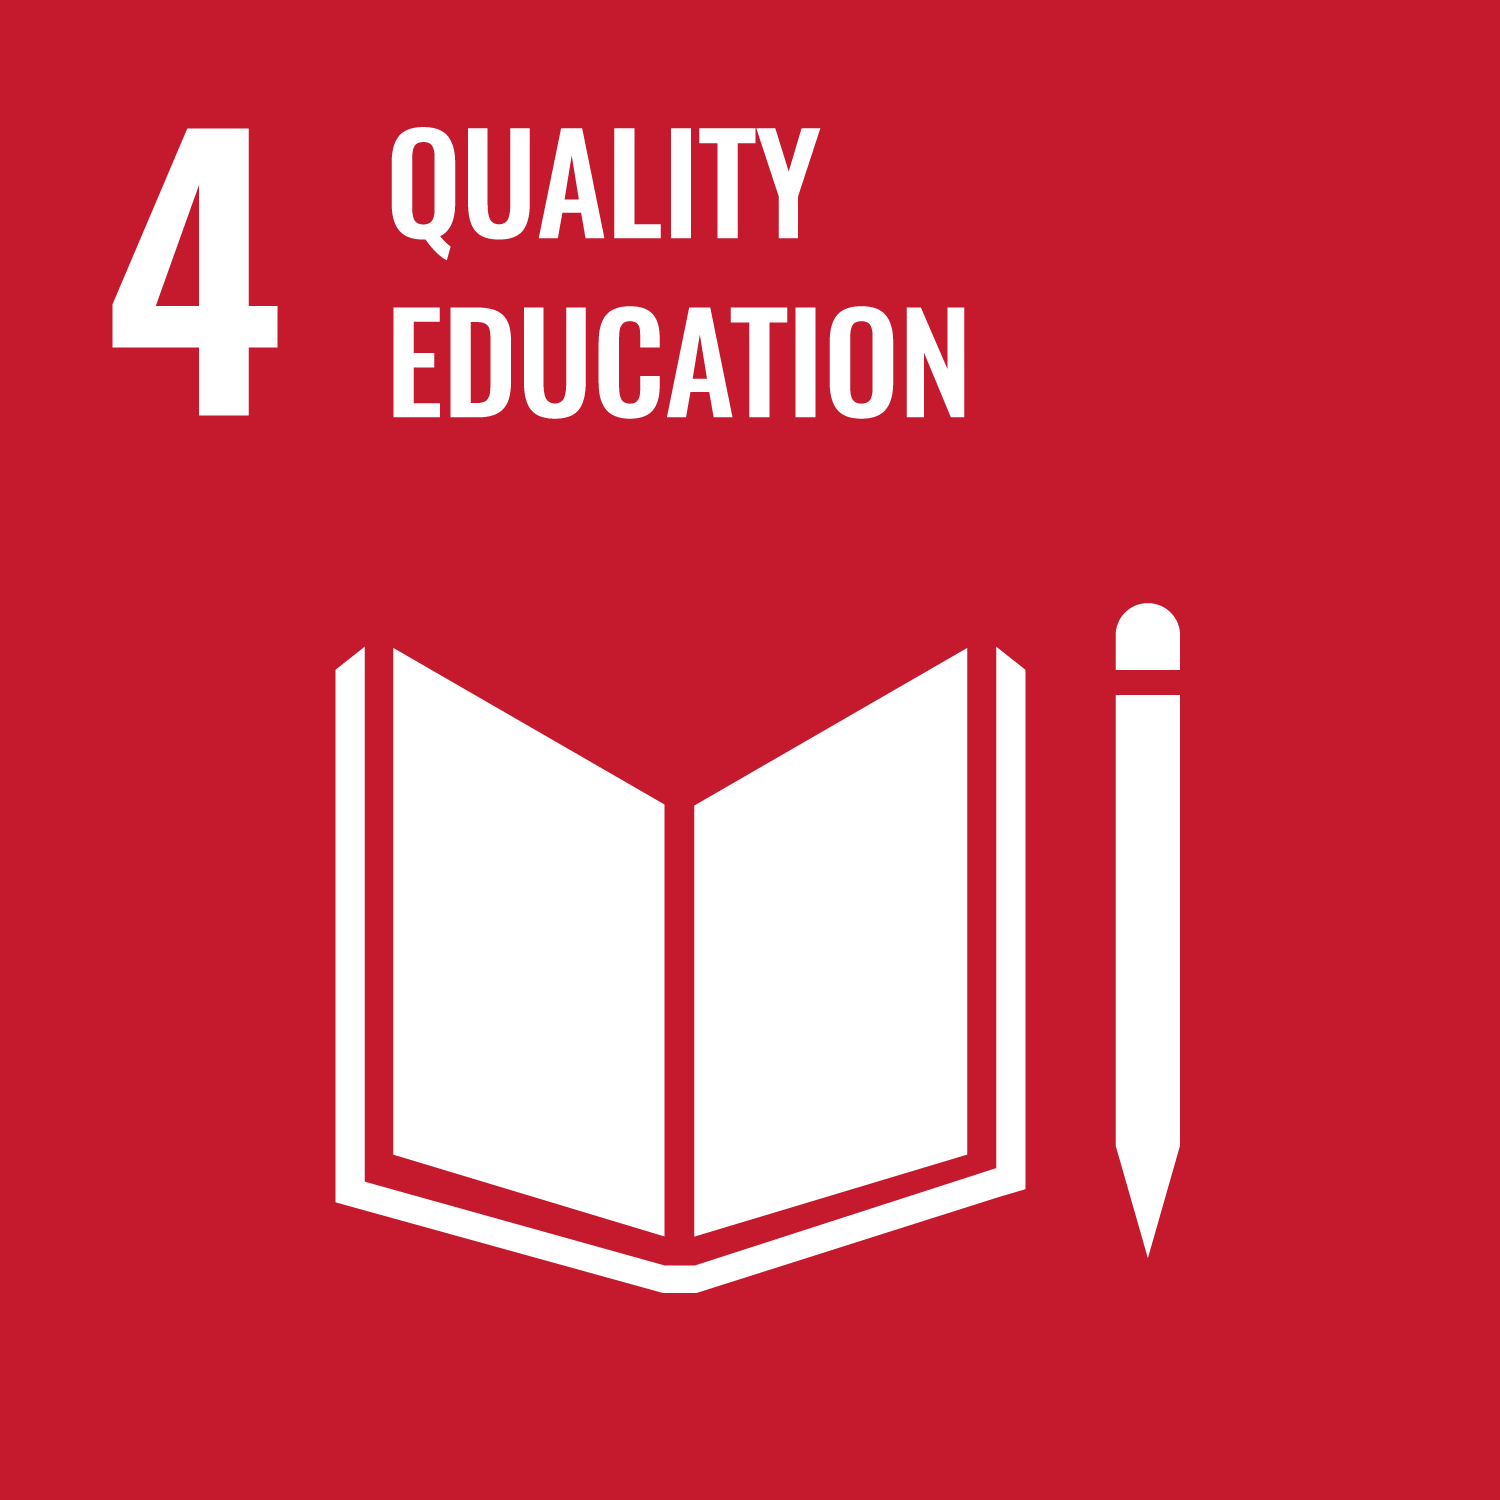 UN Sustainable Development Goal 4: Quality Education